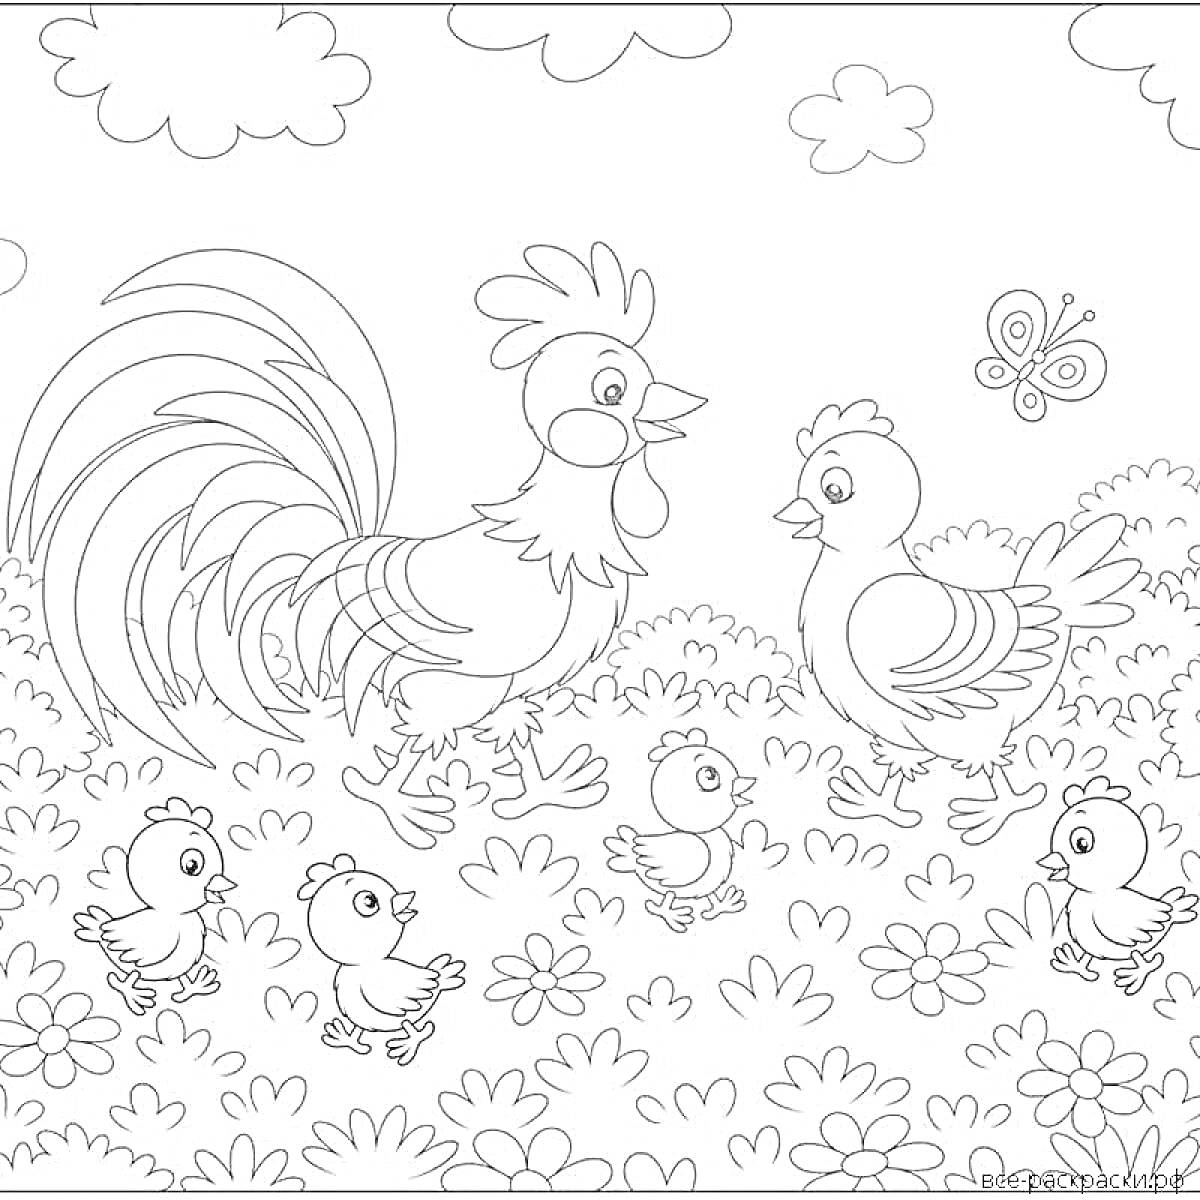 На раскраске изображено: Петух, Цыплята, Бабочка, Цветы, Трава, Облака, Природа